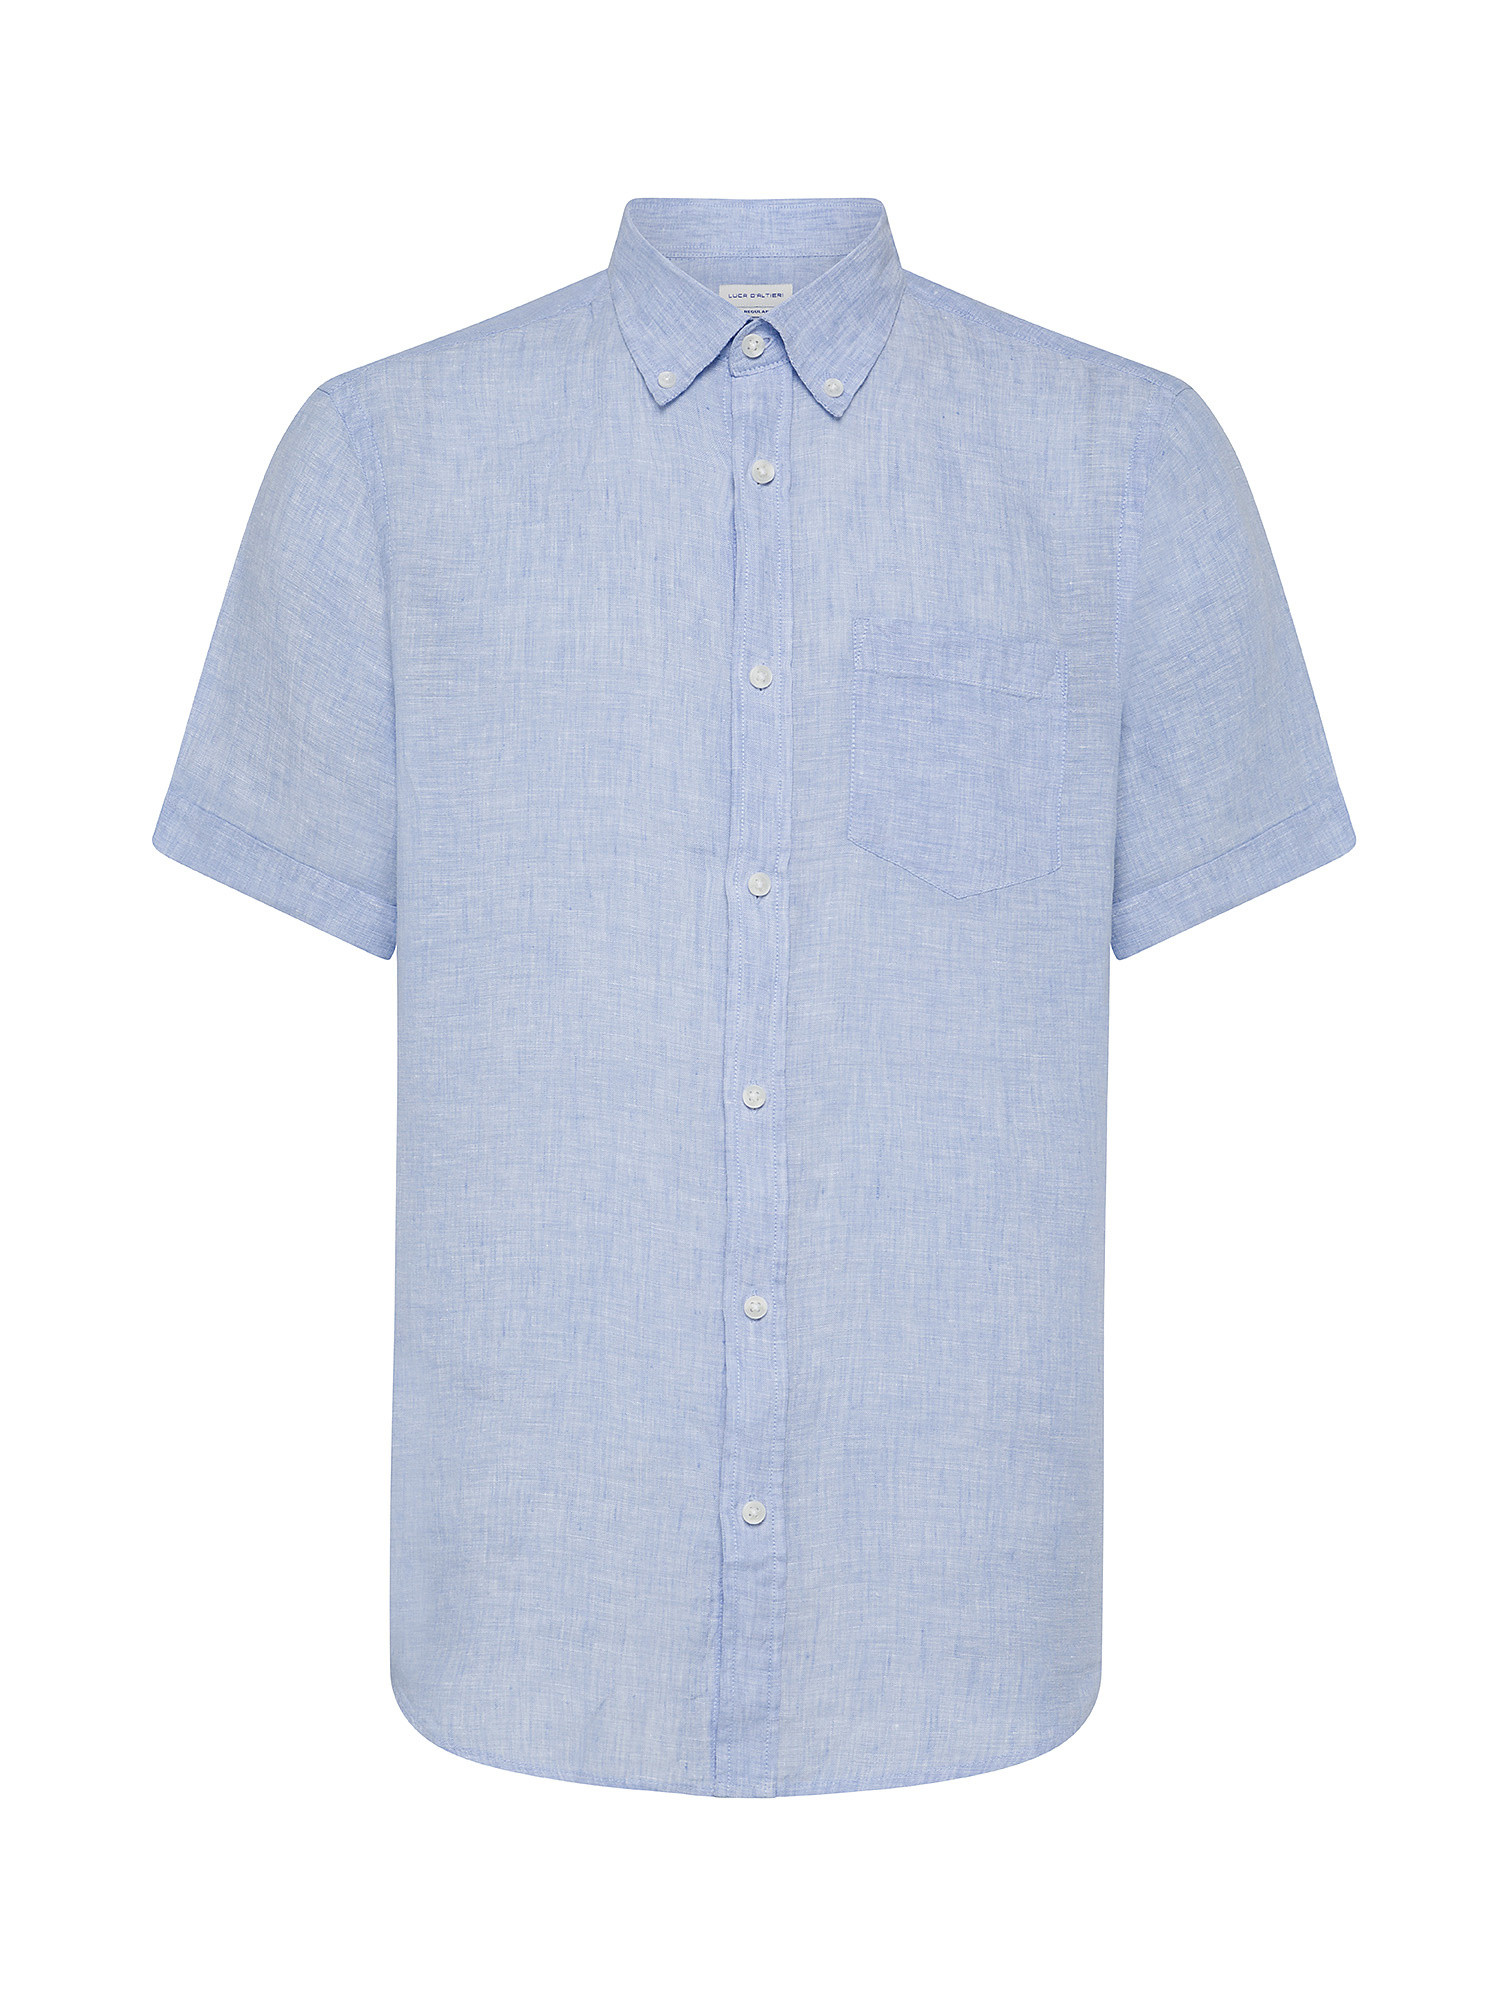 Luca D'Altieri - Regular fit shirt in pure linen, Light Blue, large image number 0